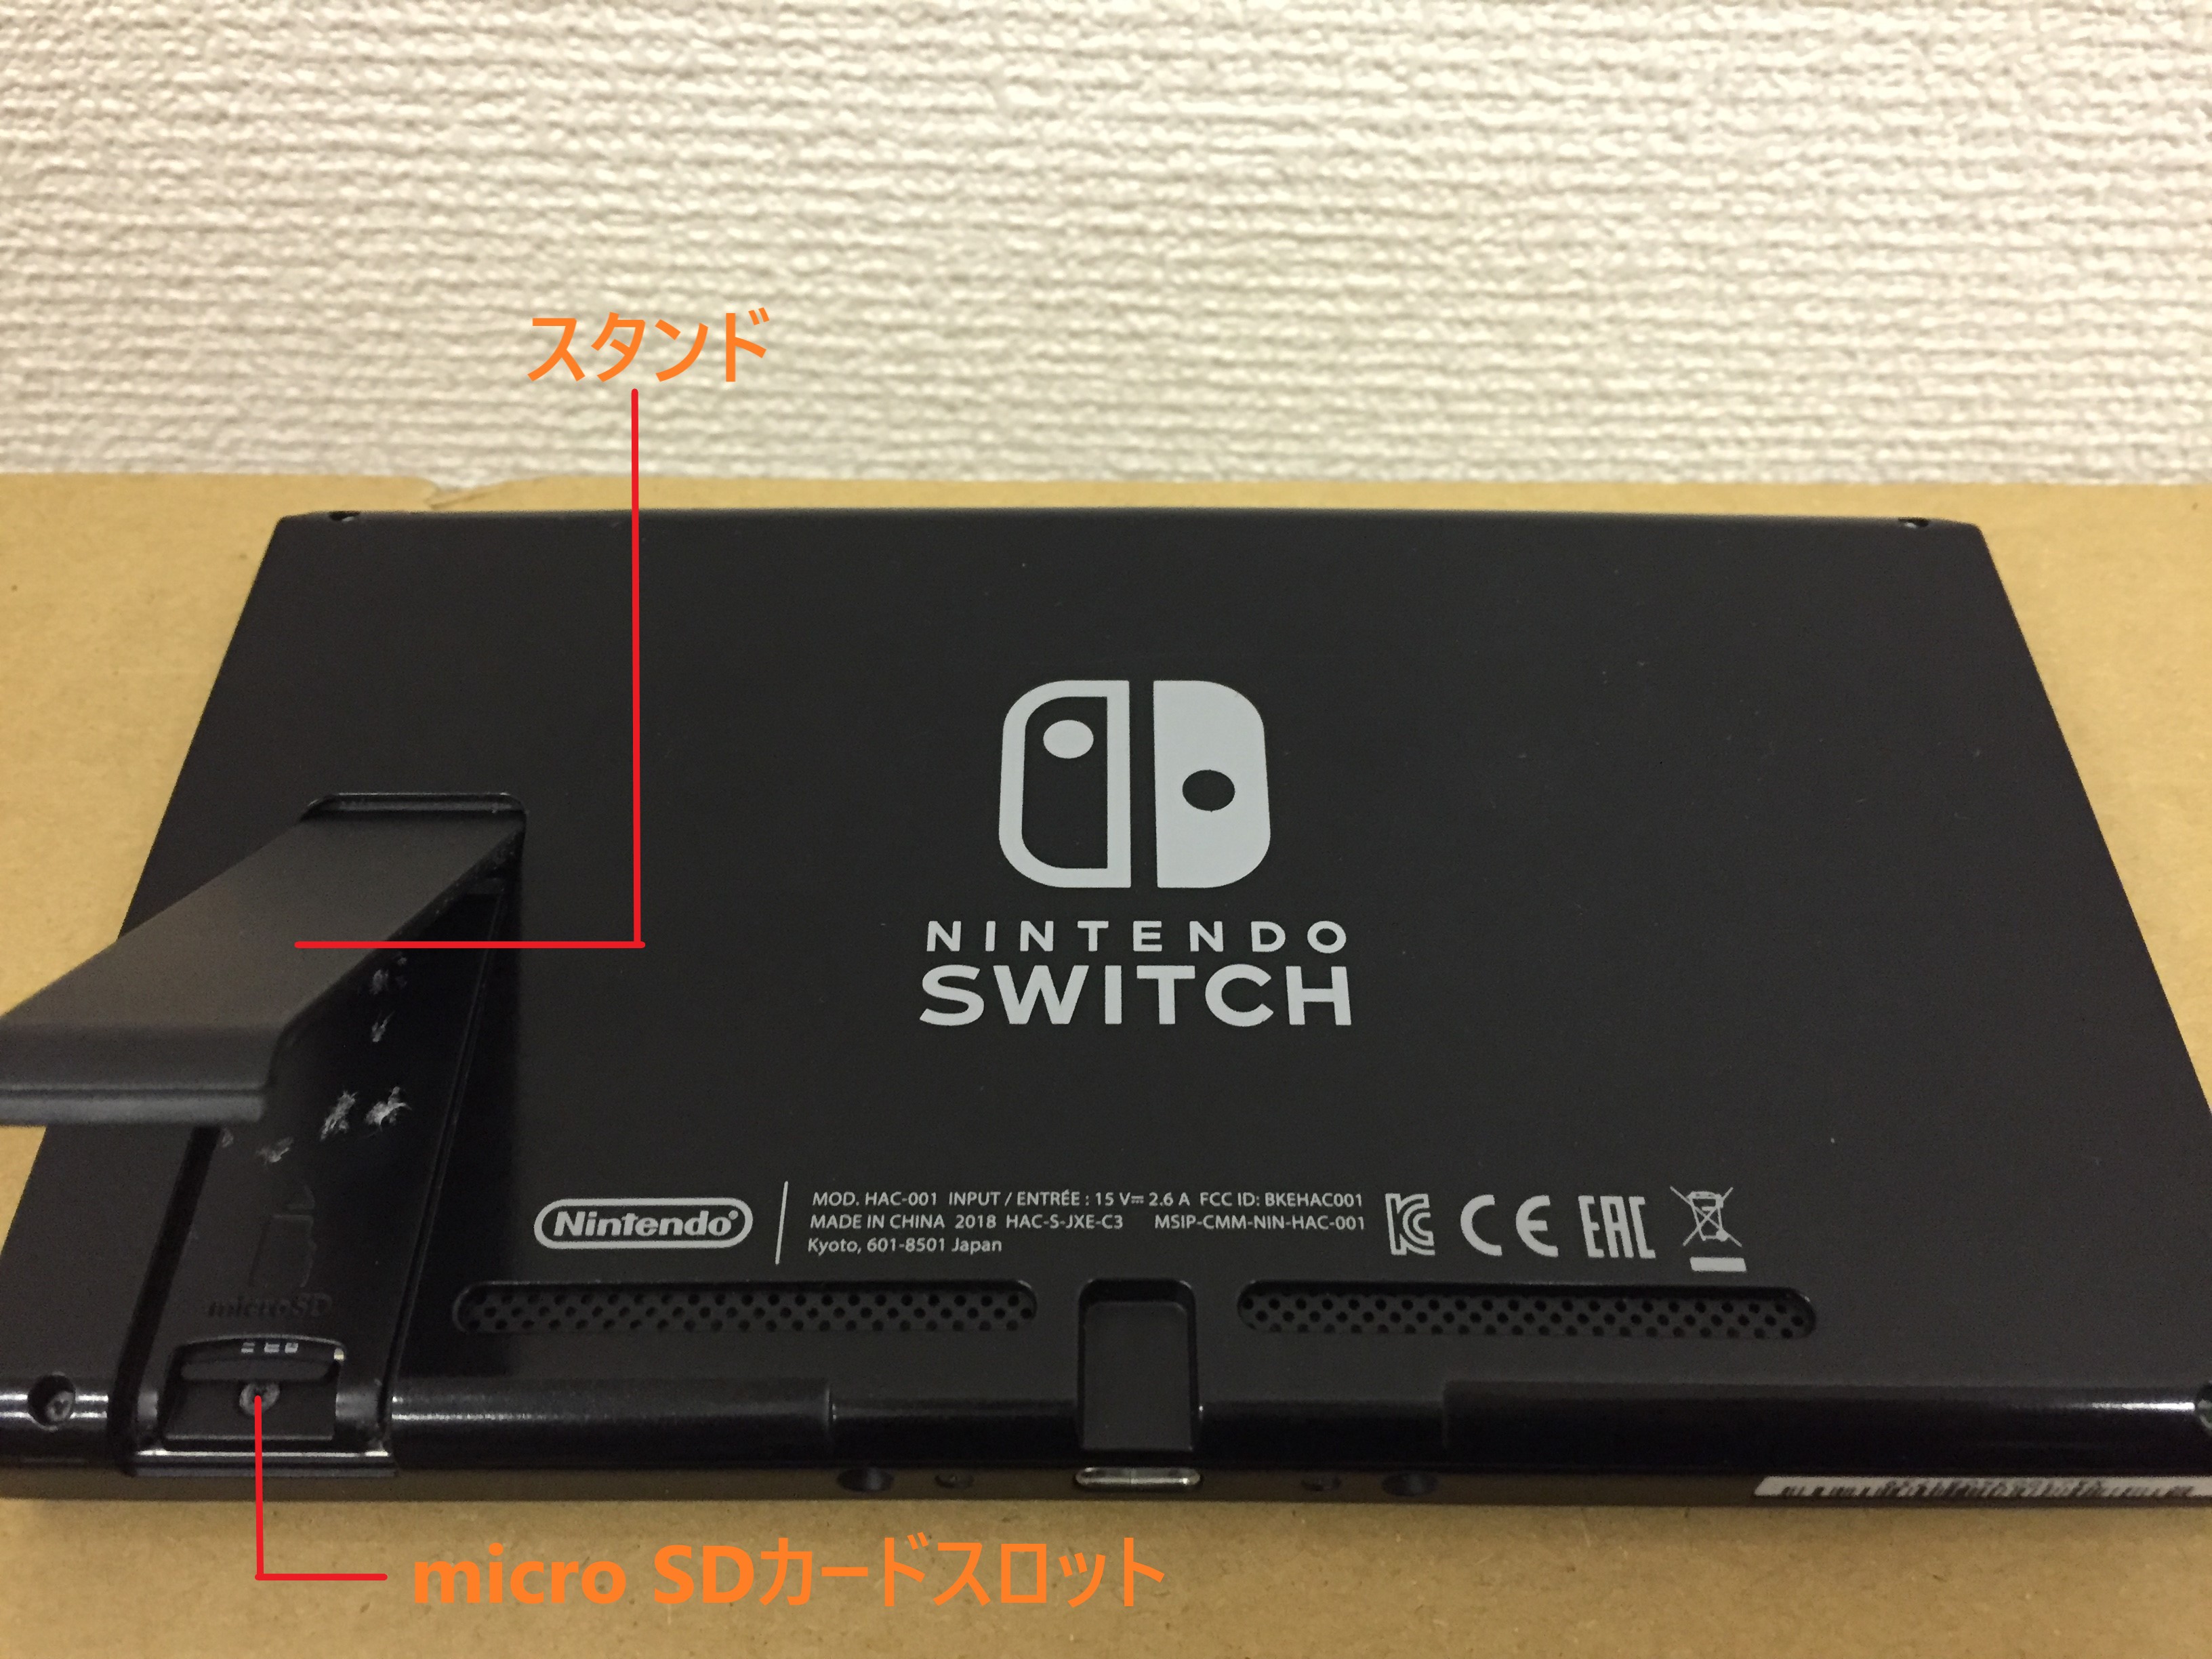 Nintendo Switchが突然の電池切れ!?そんなトラブルに遭わないように